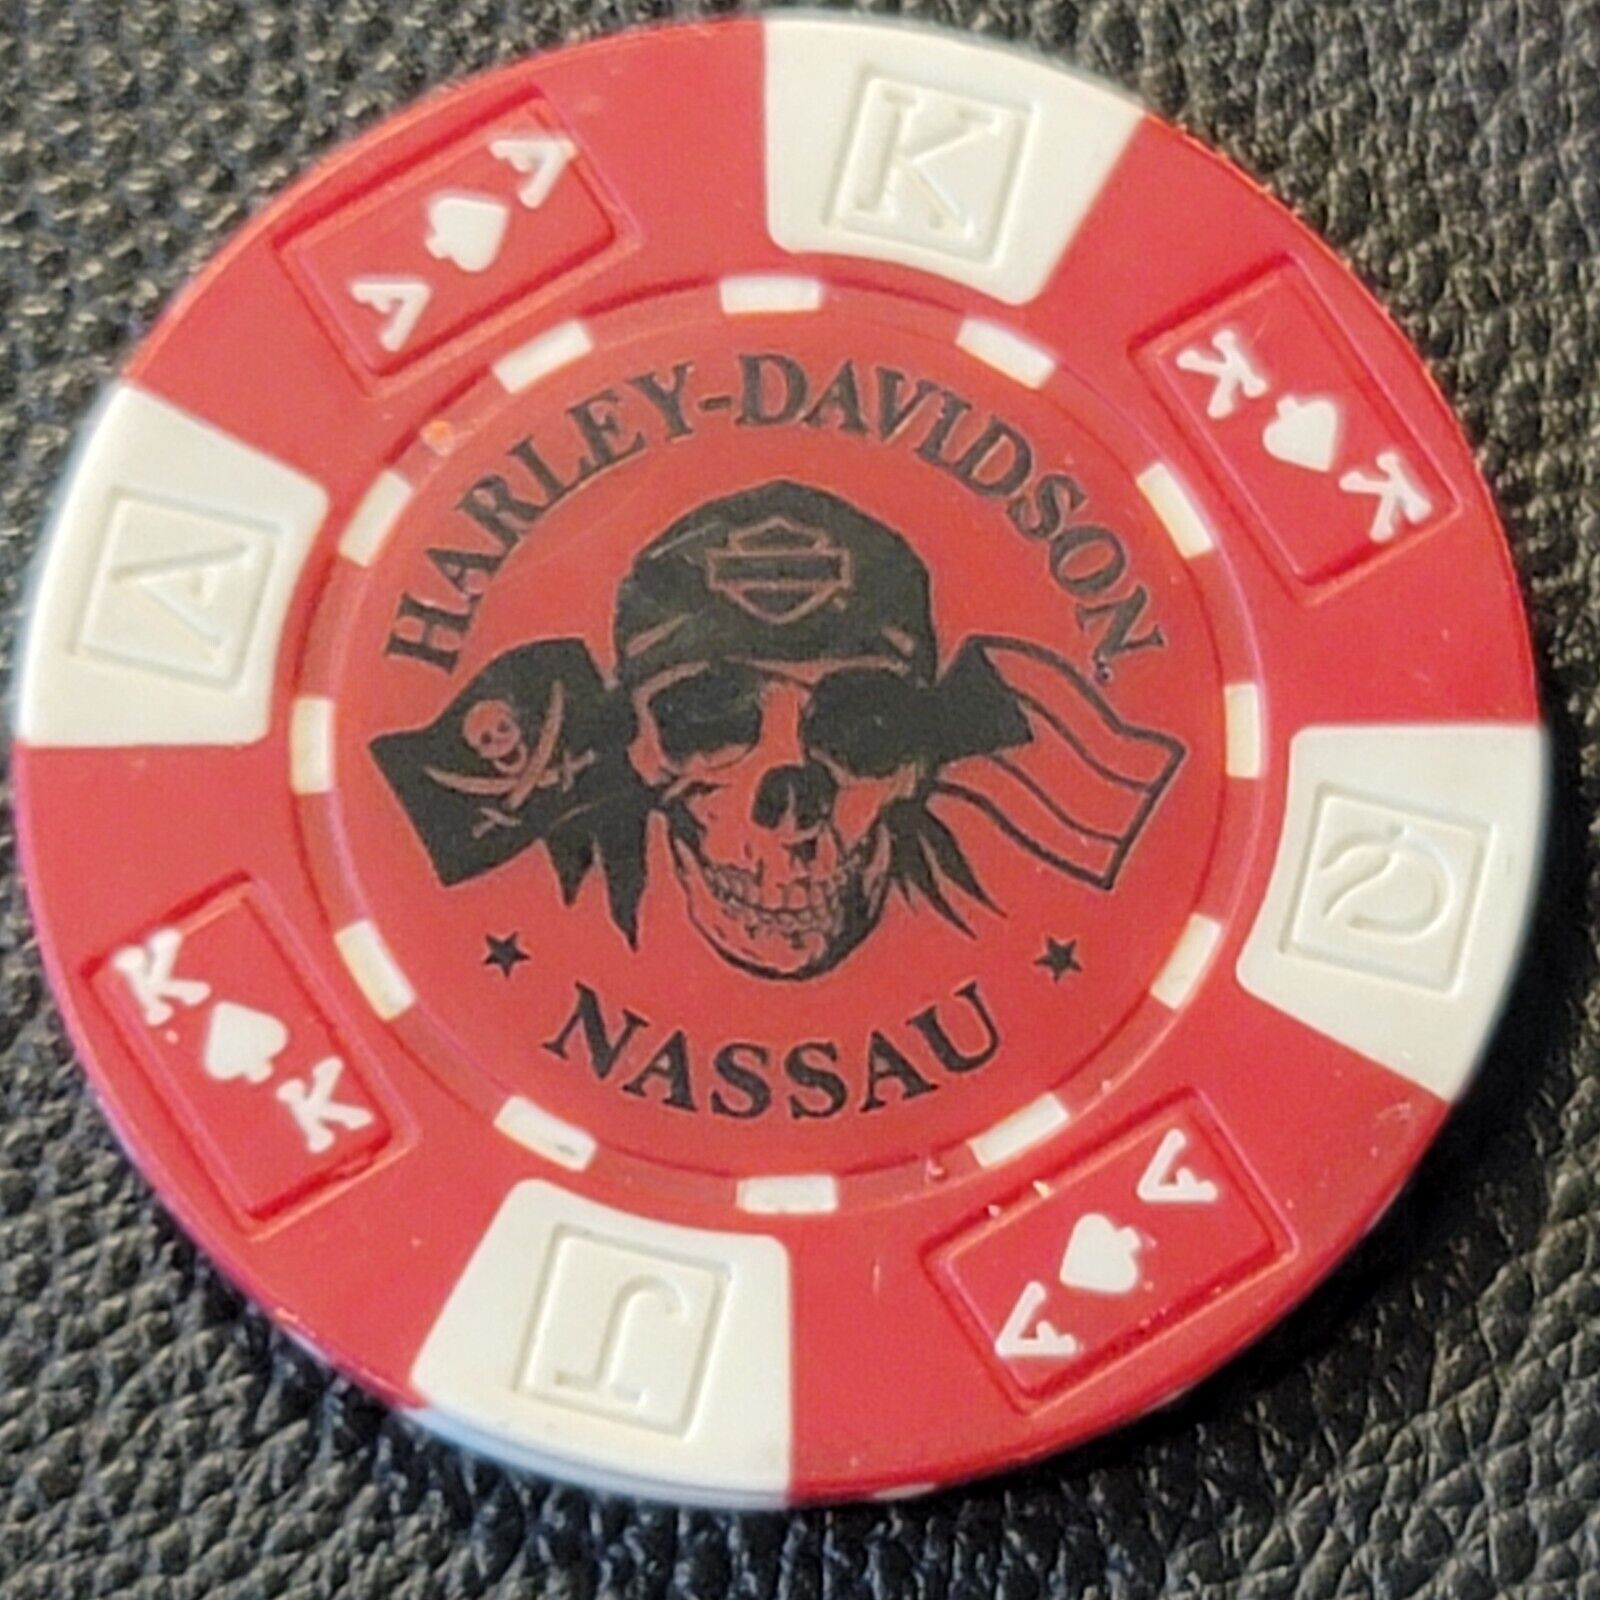 HD NASSAU ~ BAHAMAS (Red AKQJ) International Harley Davidson Poker Chip